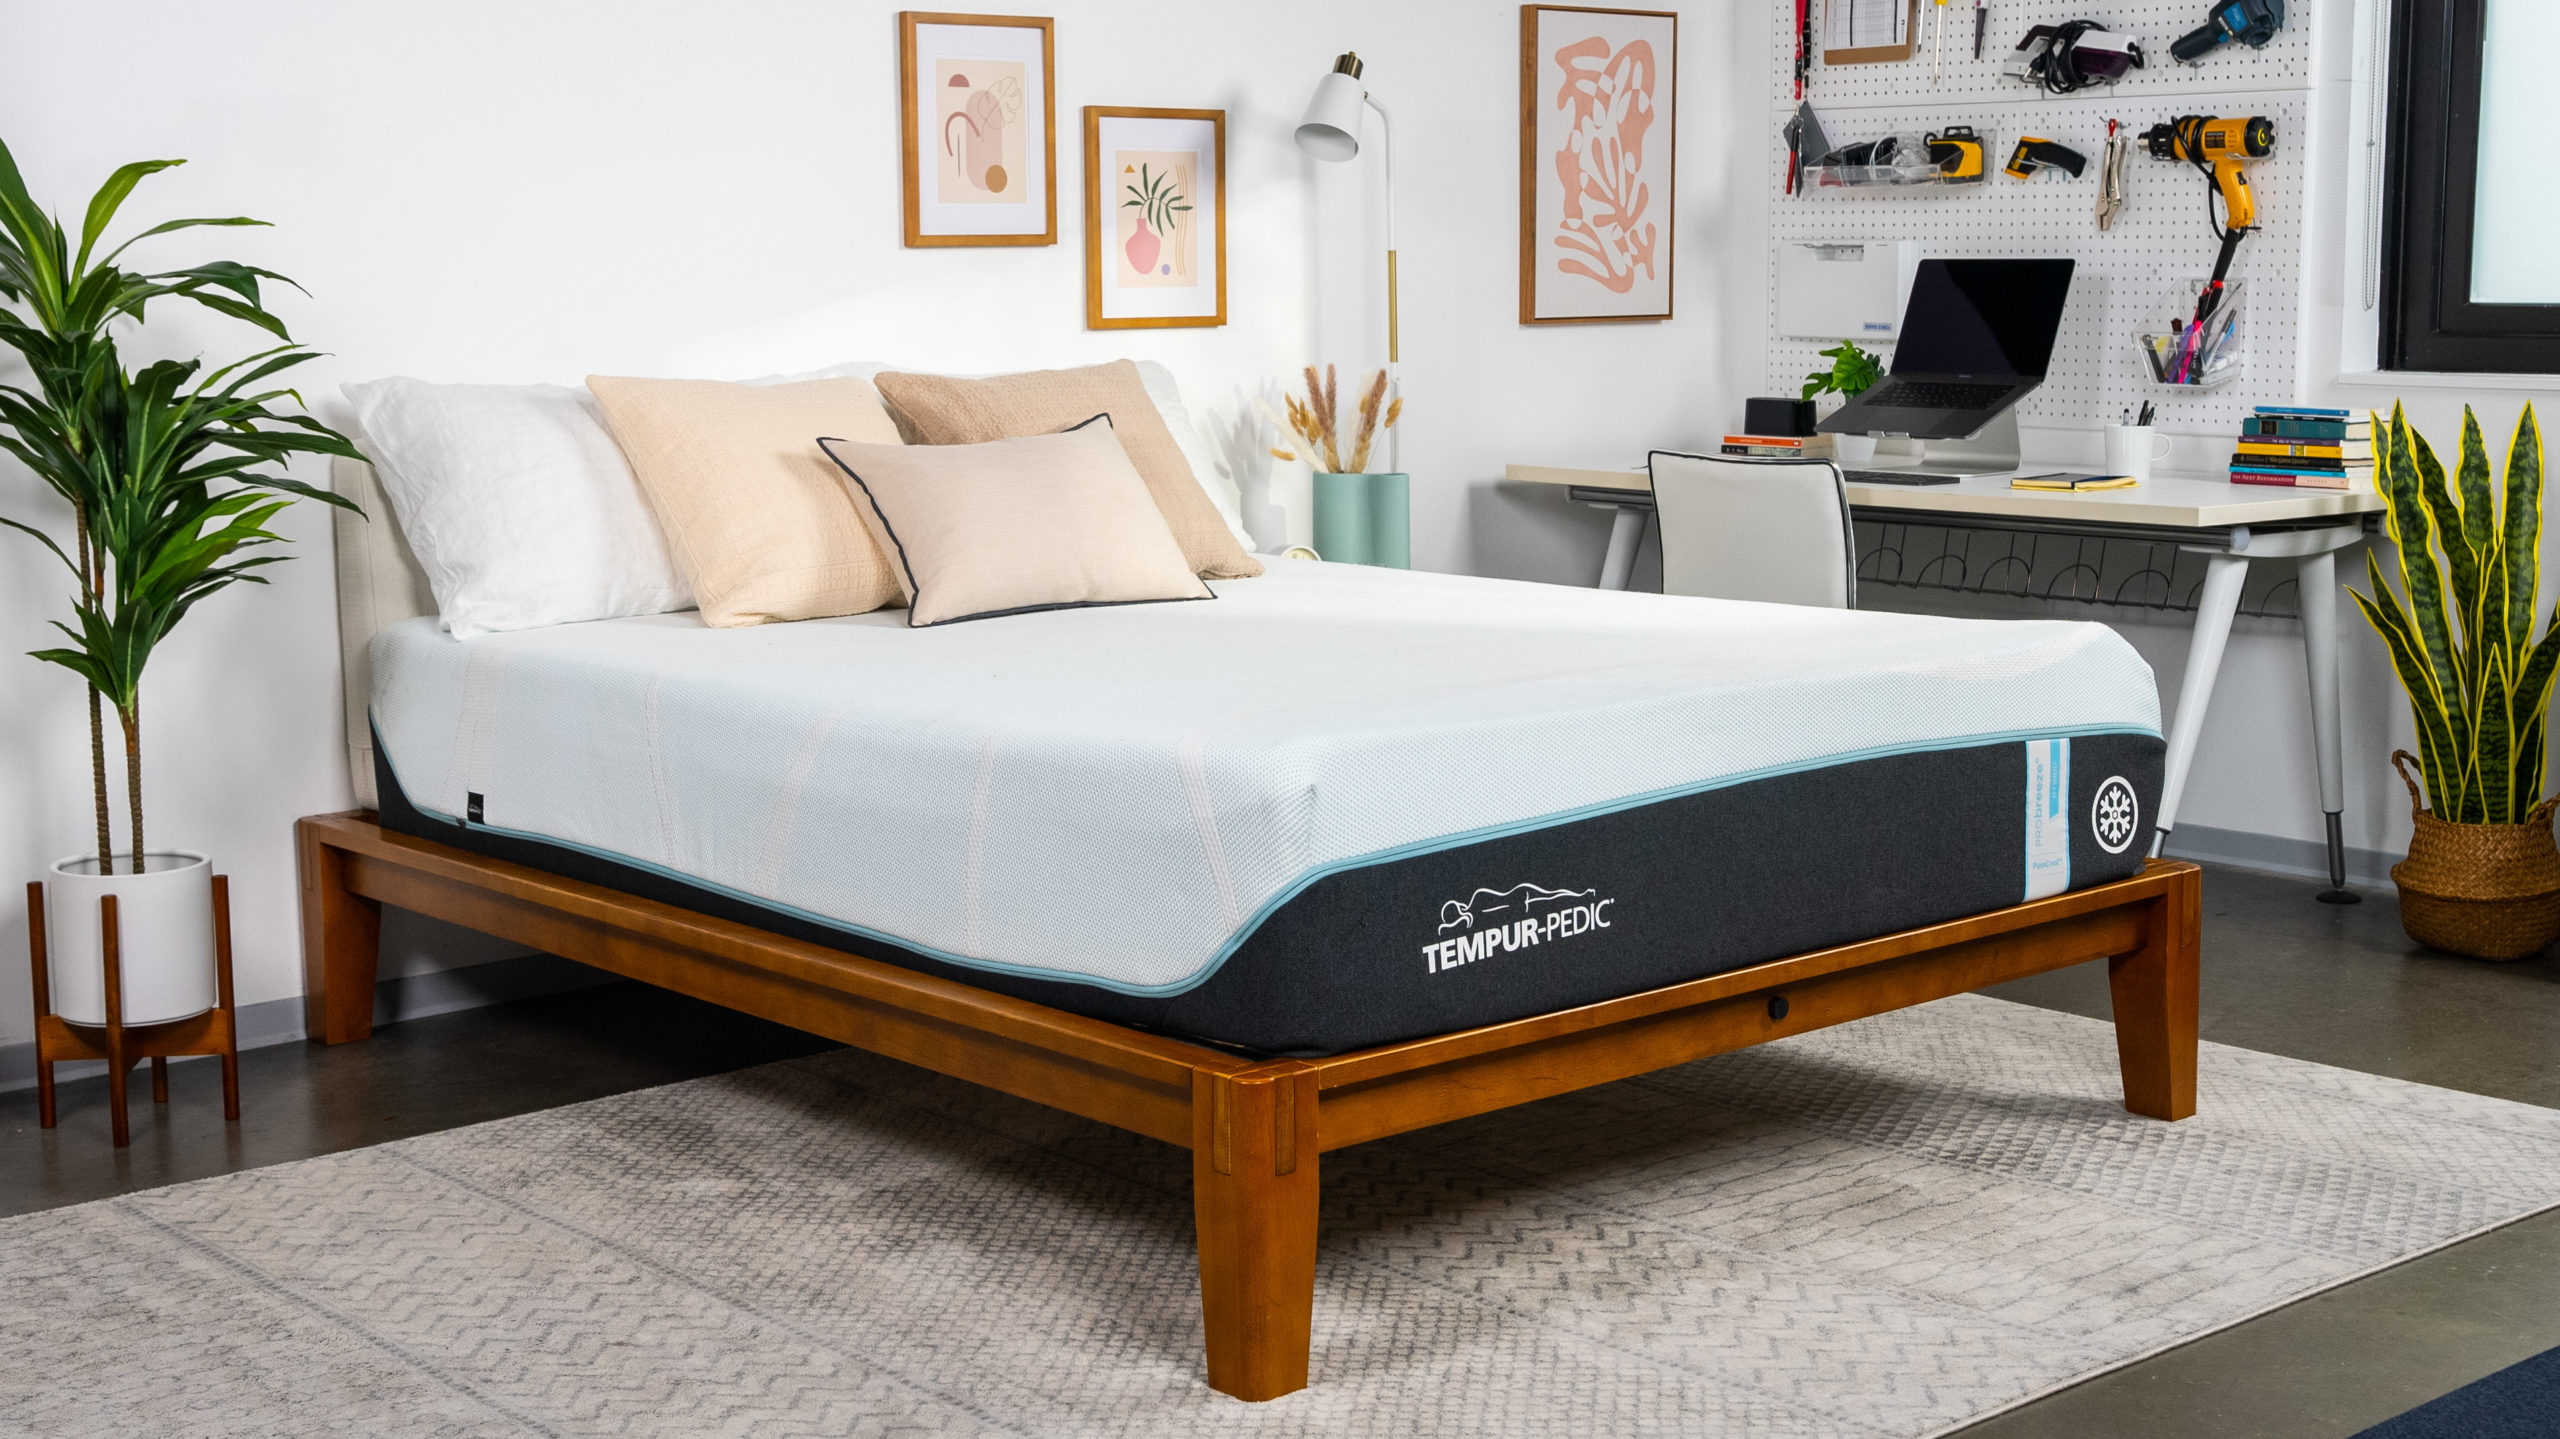 back pedic mattress review